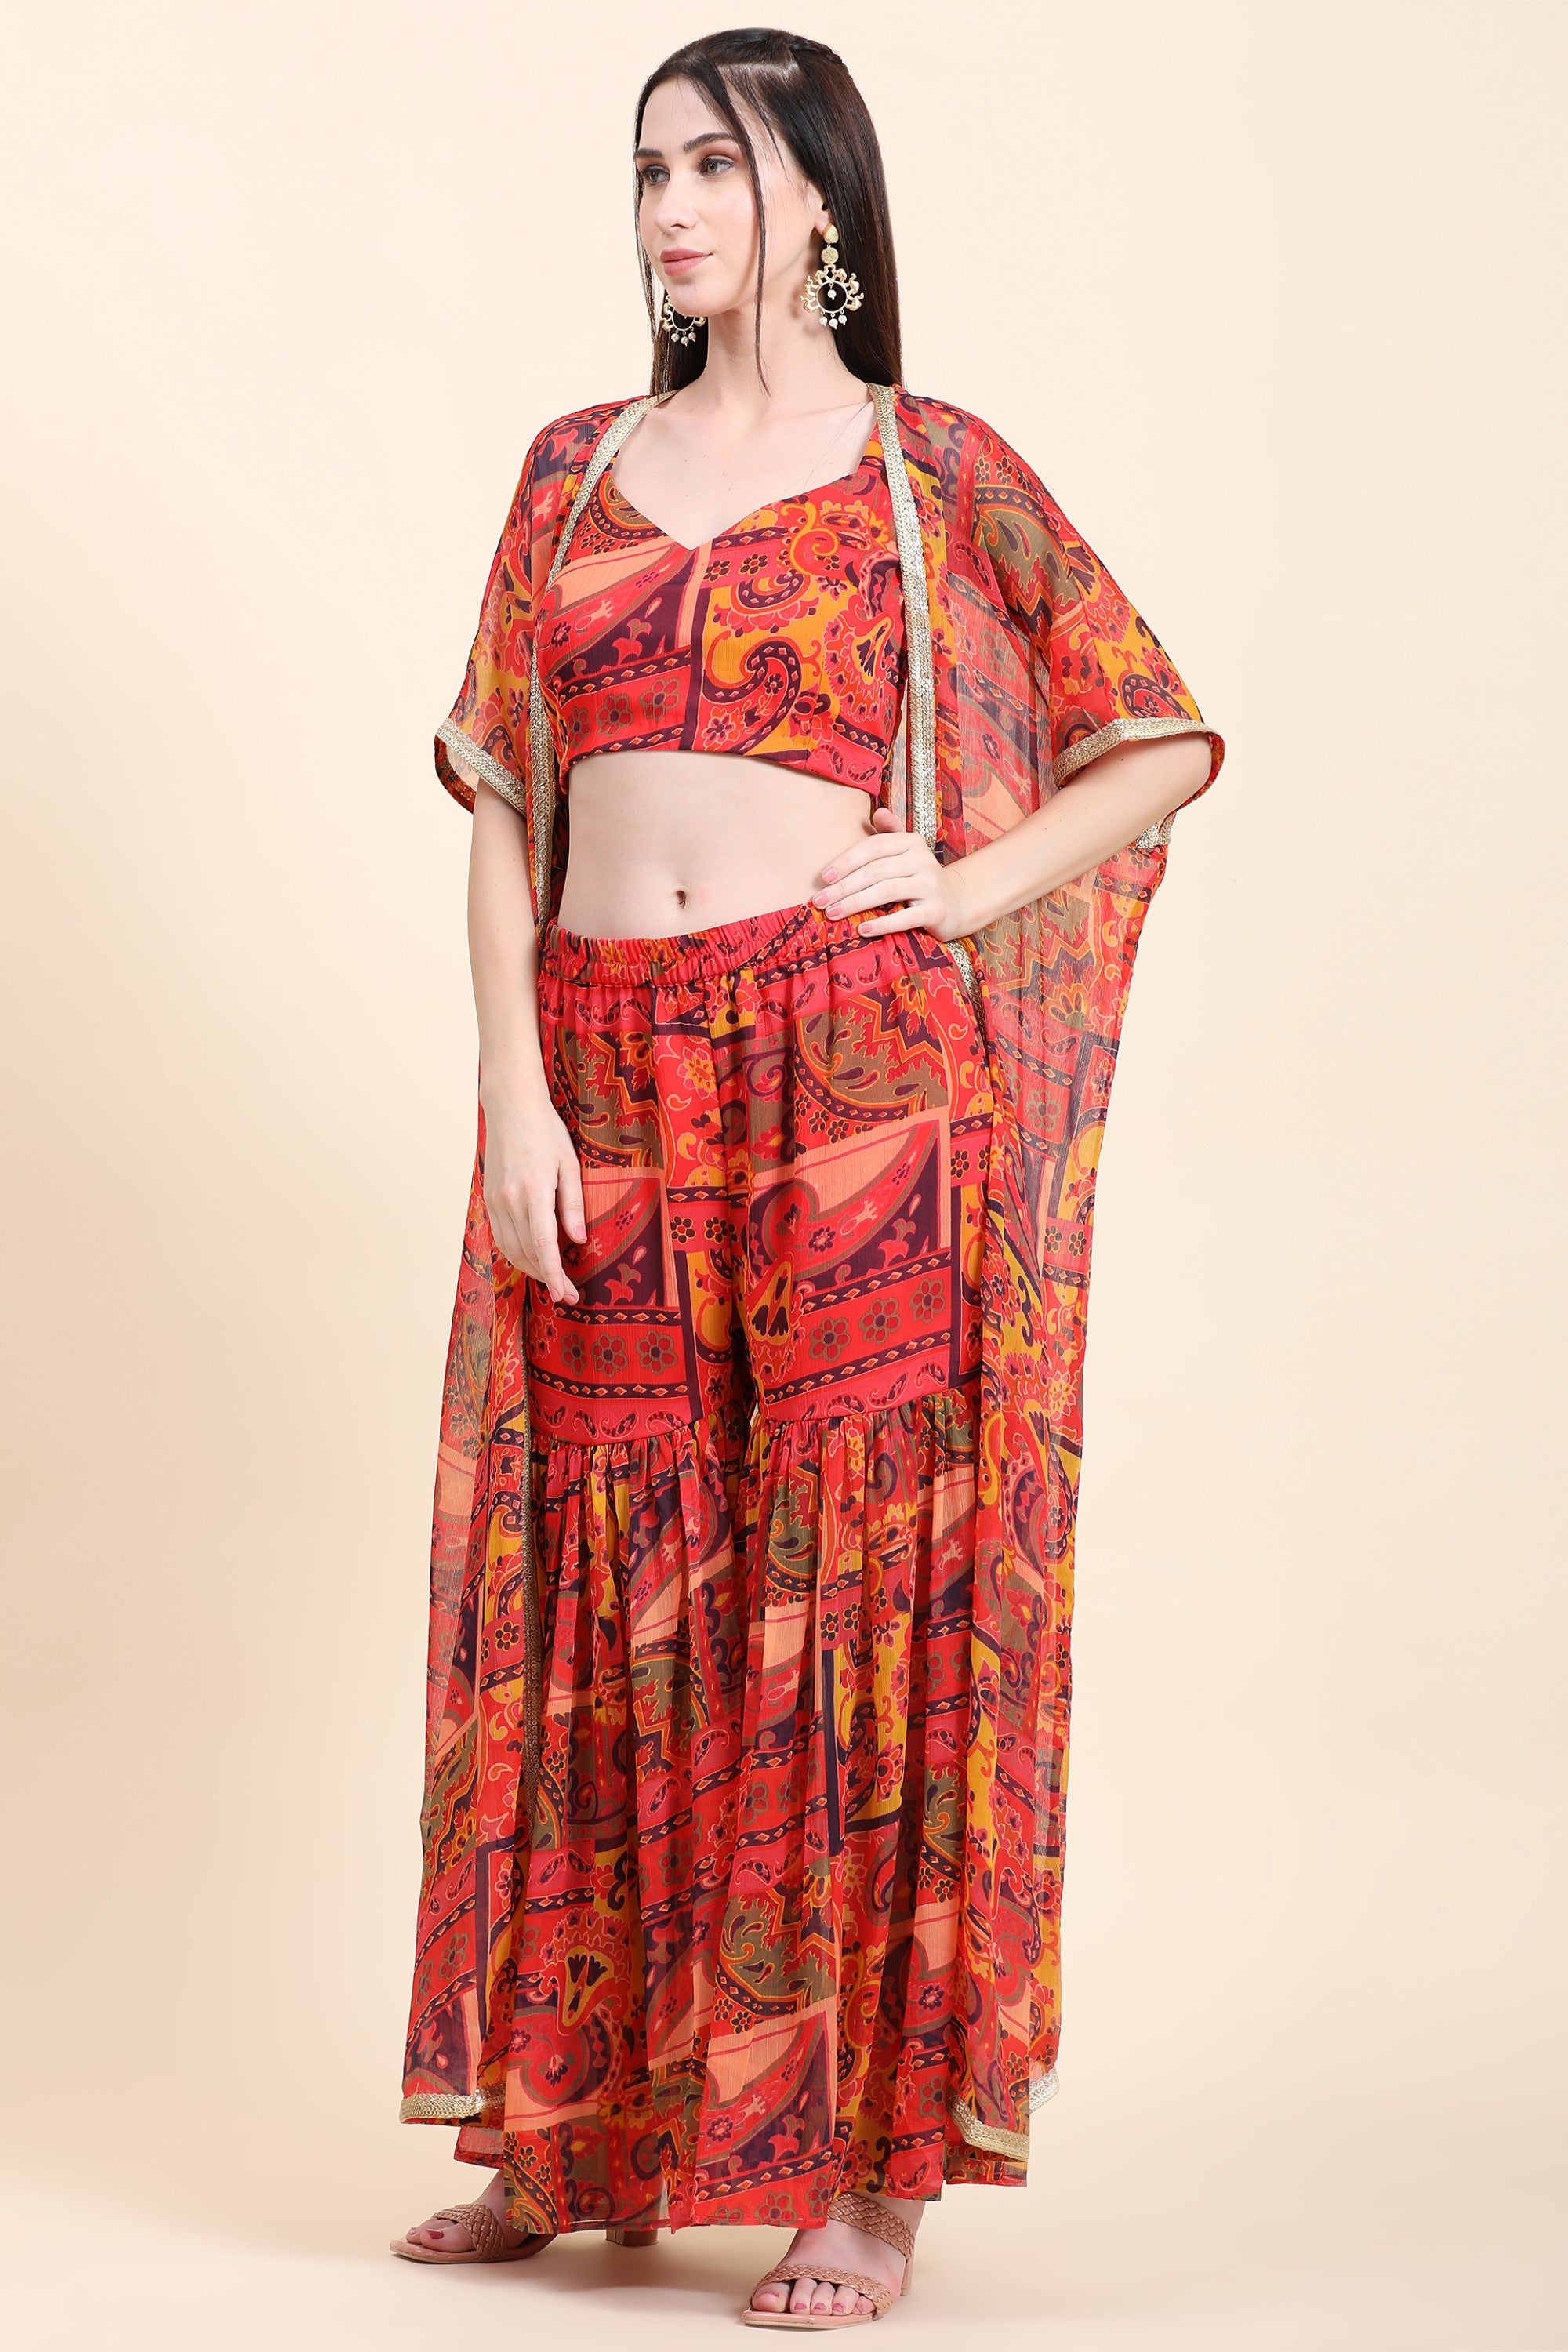 Women's Printed Chiffon Red base Blouse, Cape, Garara Skirt Set - MIRACOLOS by Ruchi